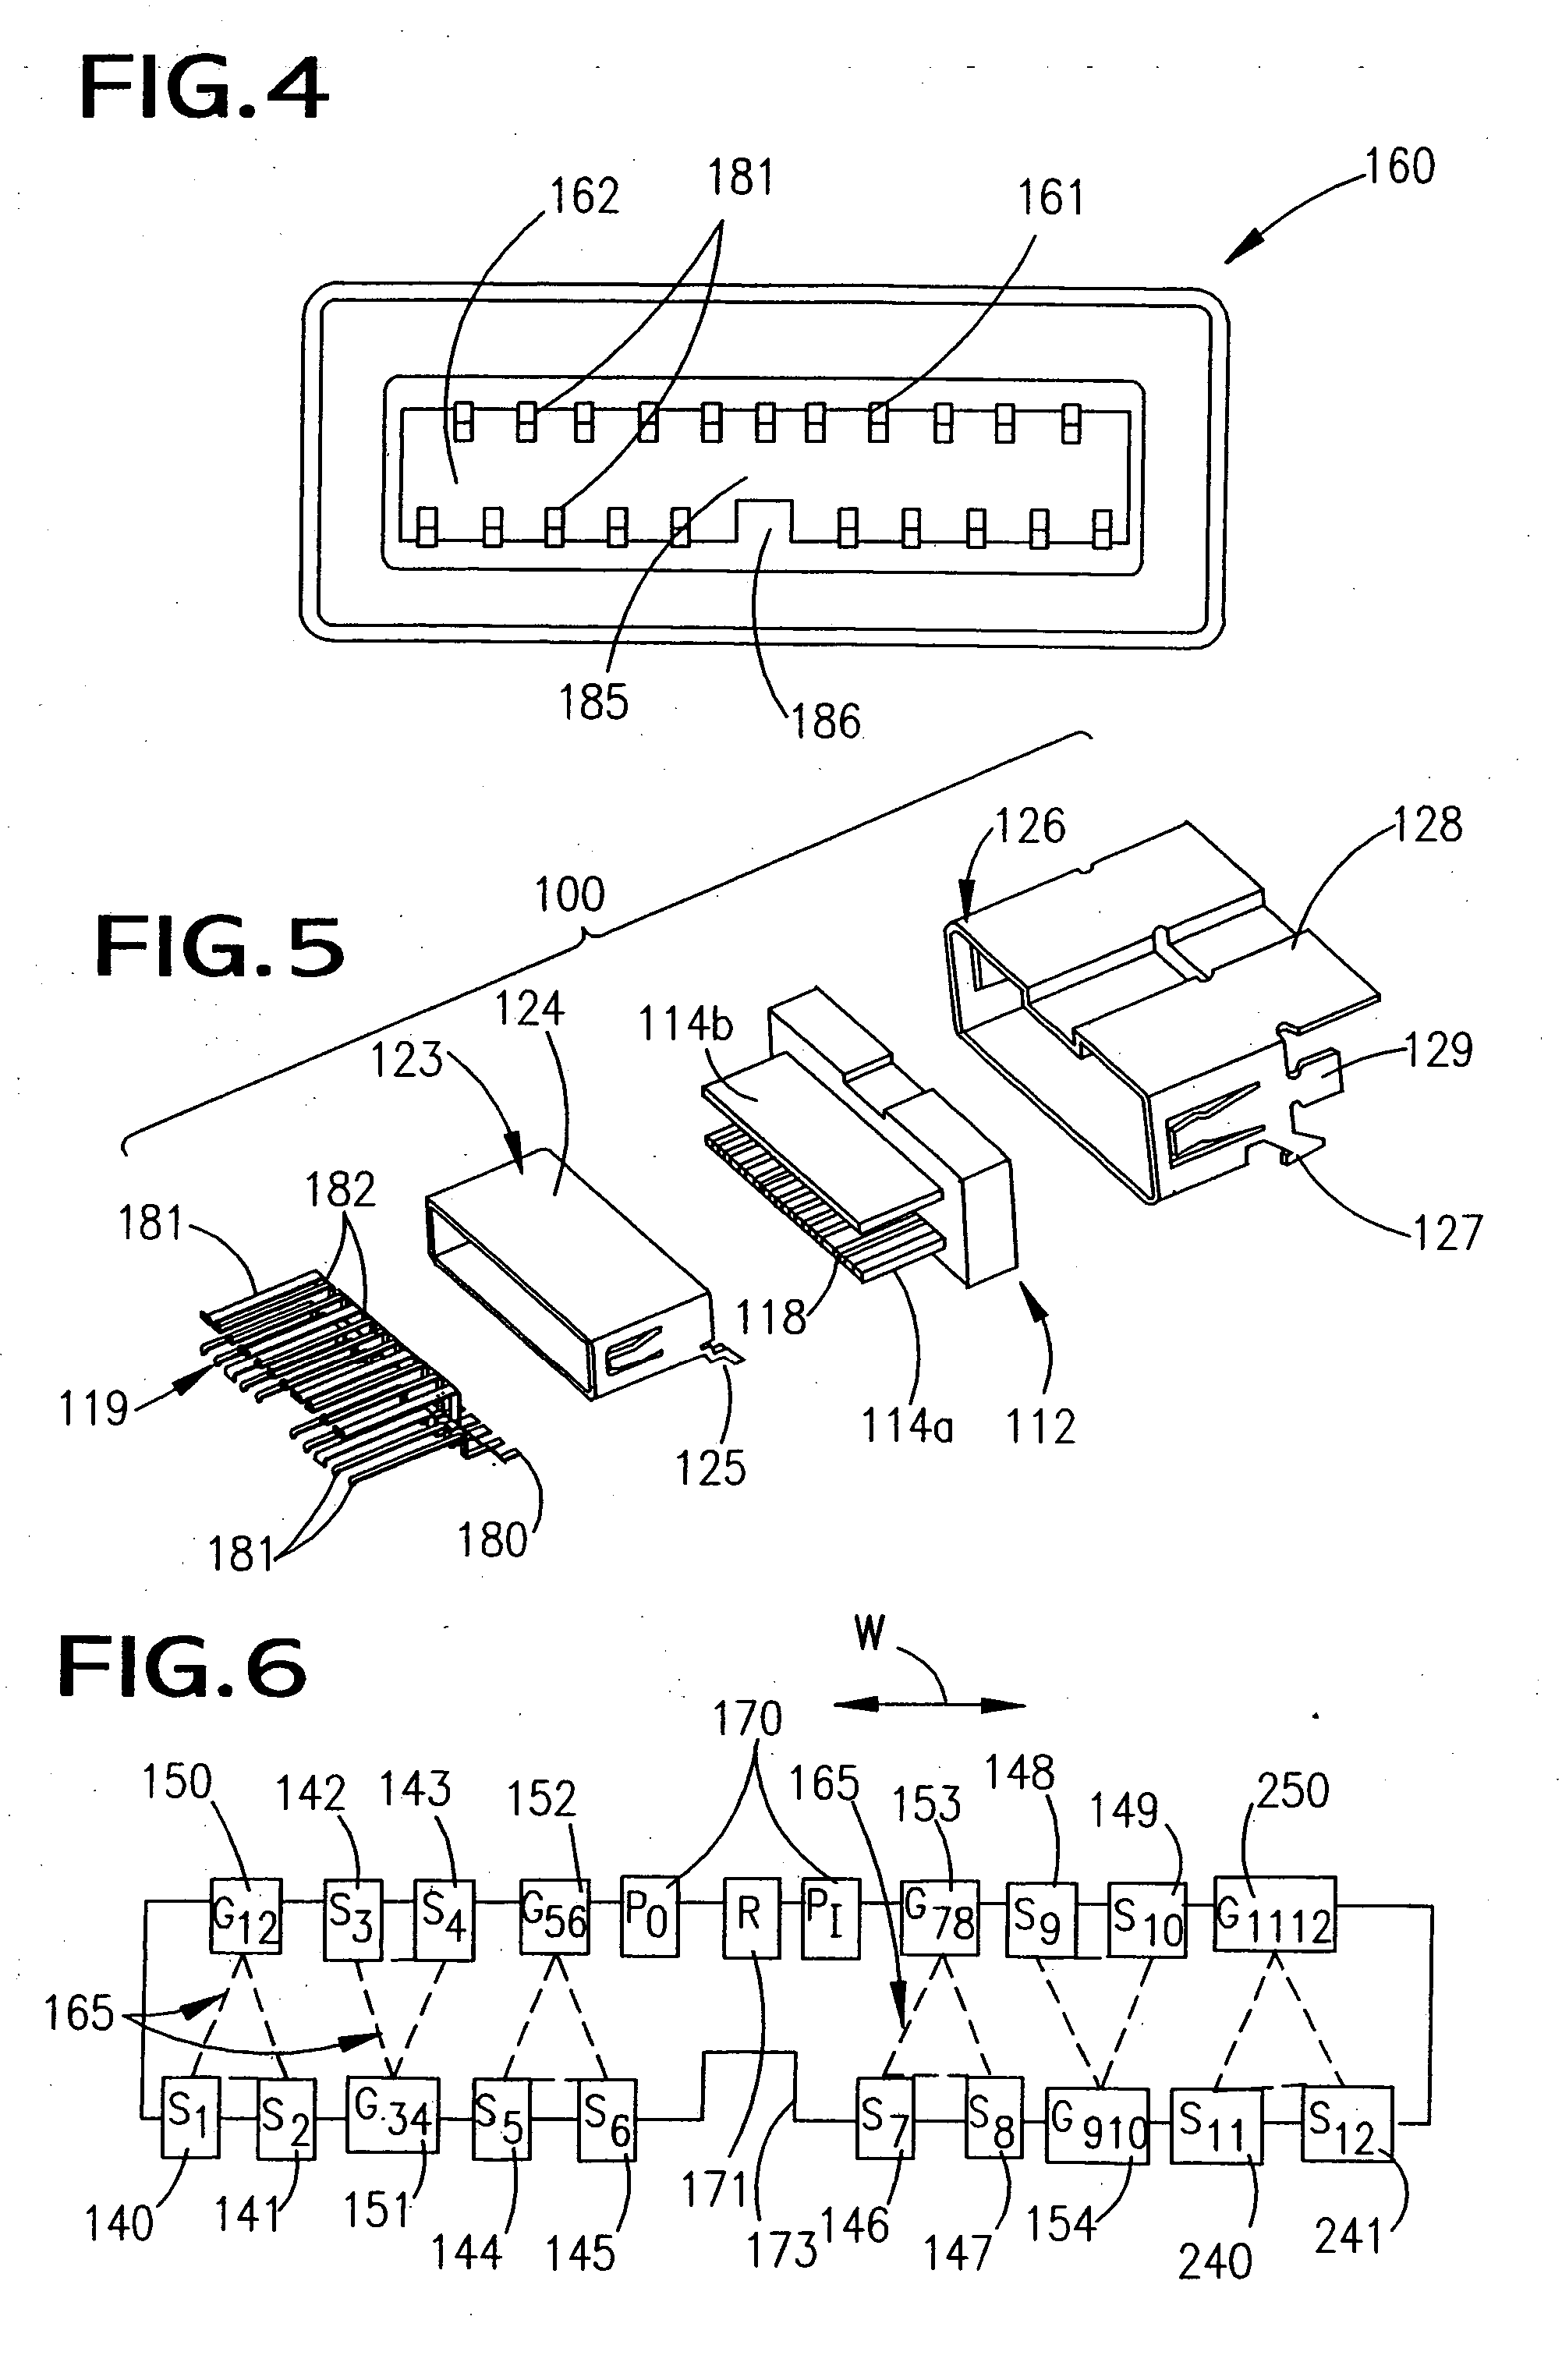 High-density, impedance-tuned connector having modular construction